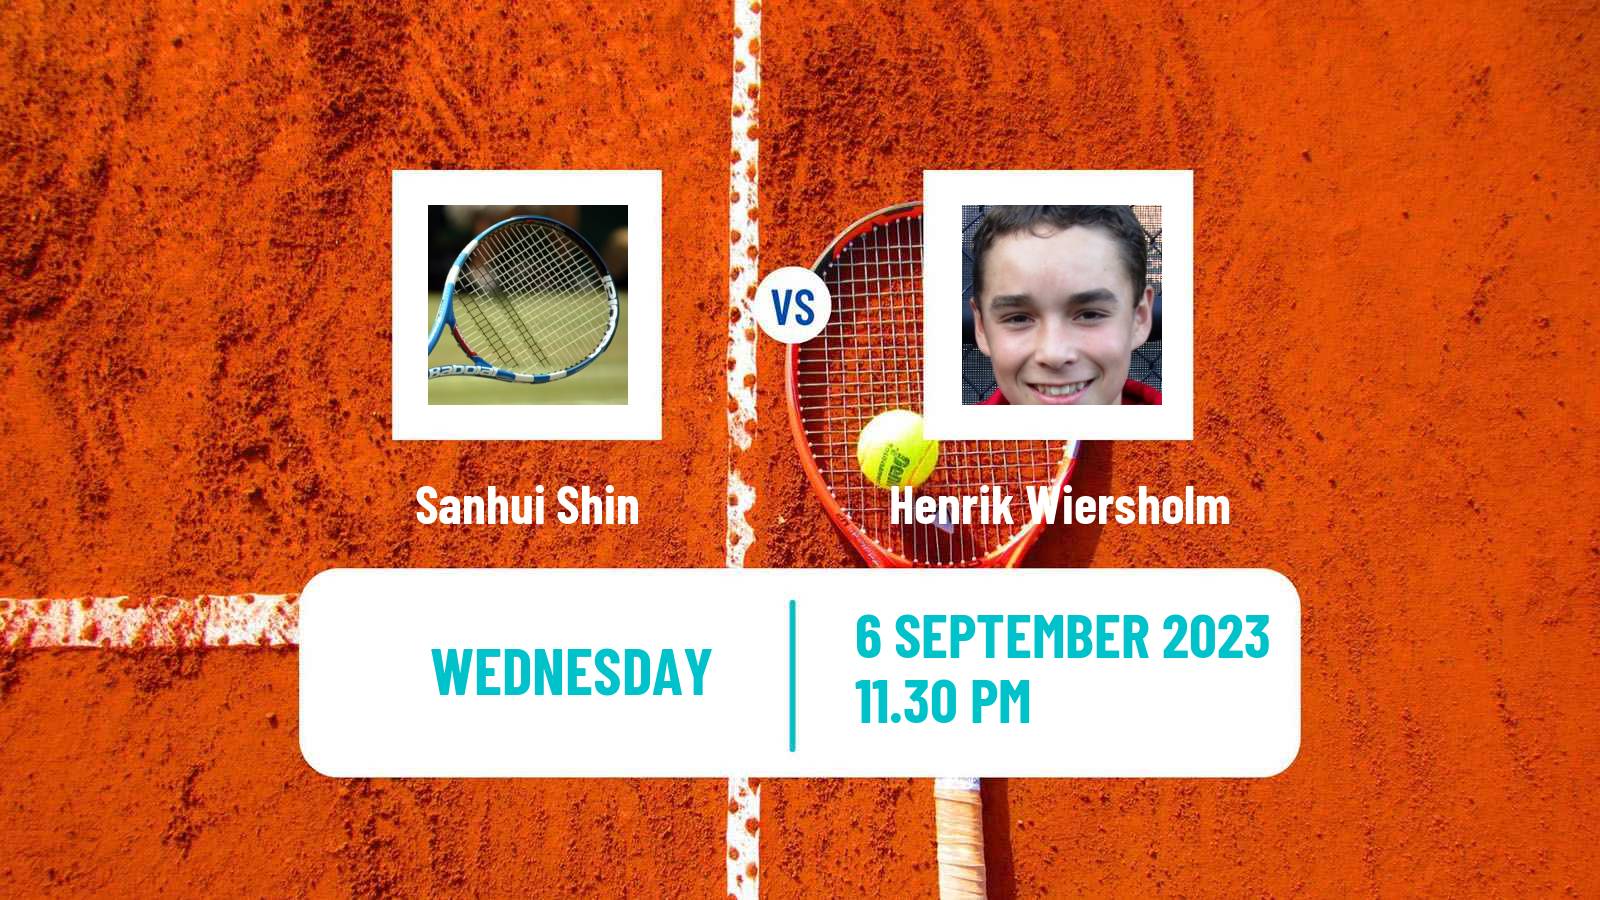 Tennis ITF M25 Hong Kong 2 Men Sanhui Shin - Henrik Wiersholm